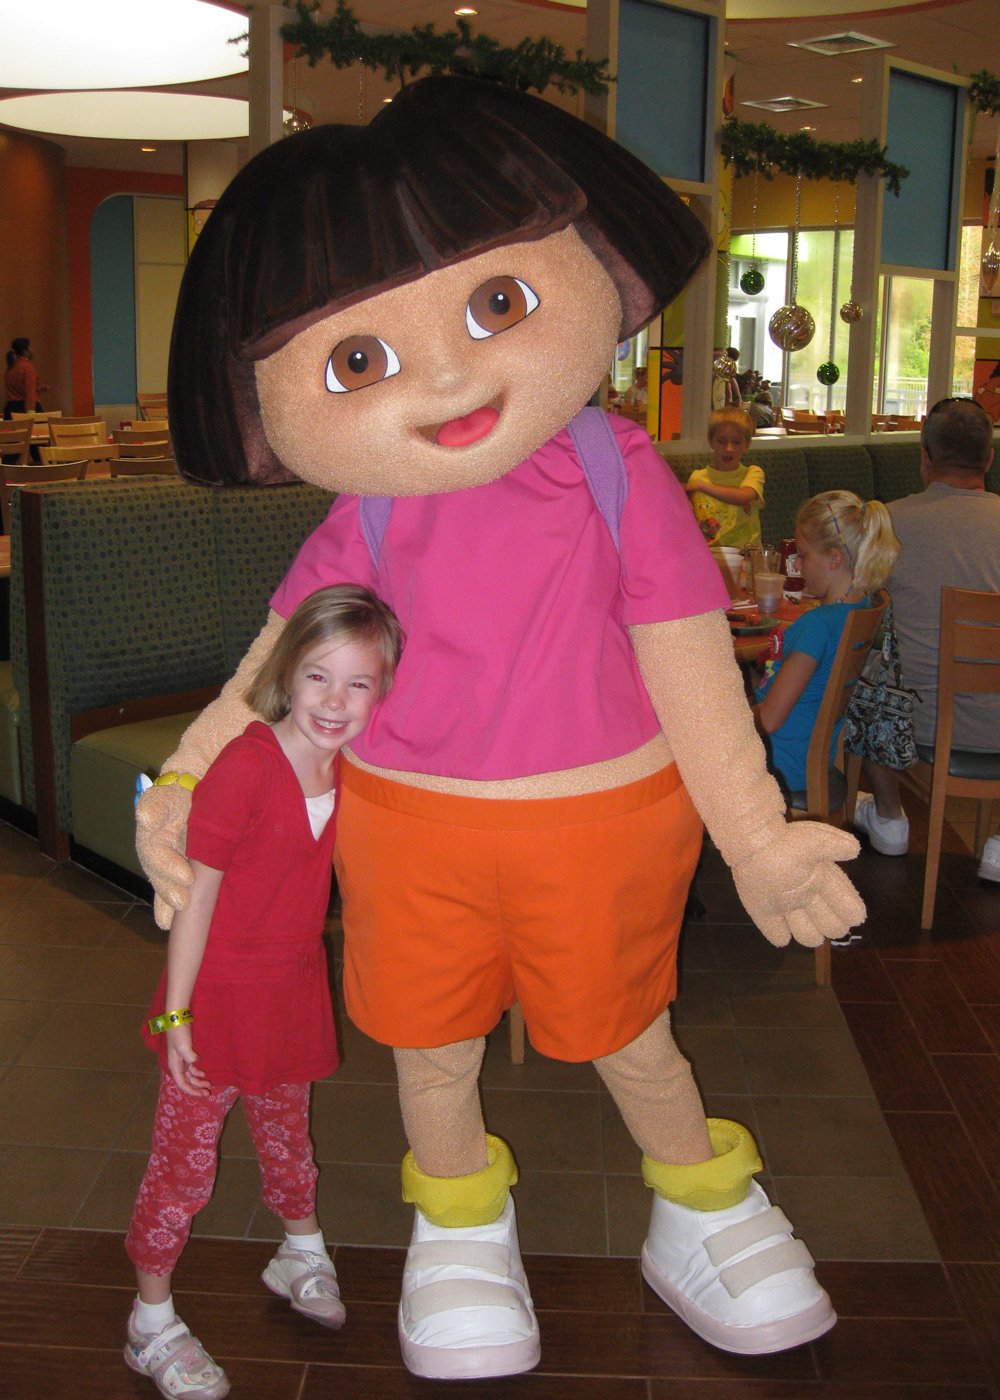 Dora the Explorer at the Nick Hotel 2009